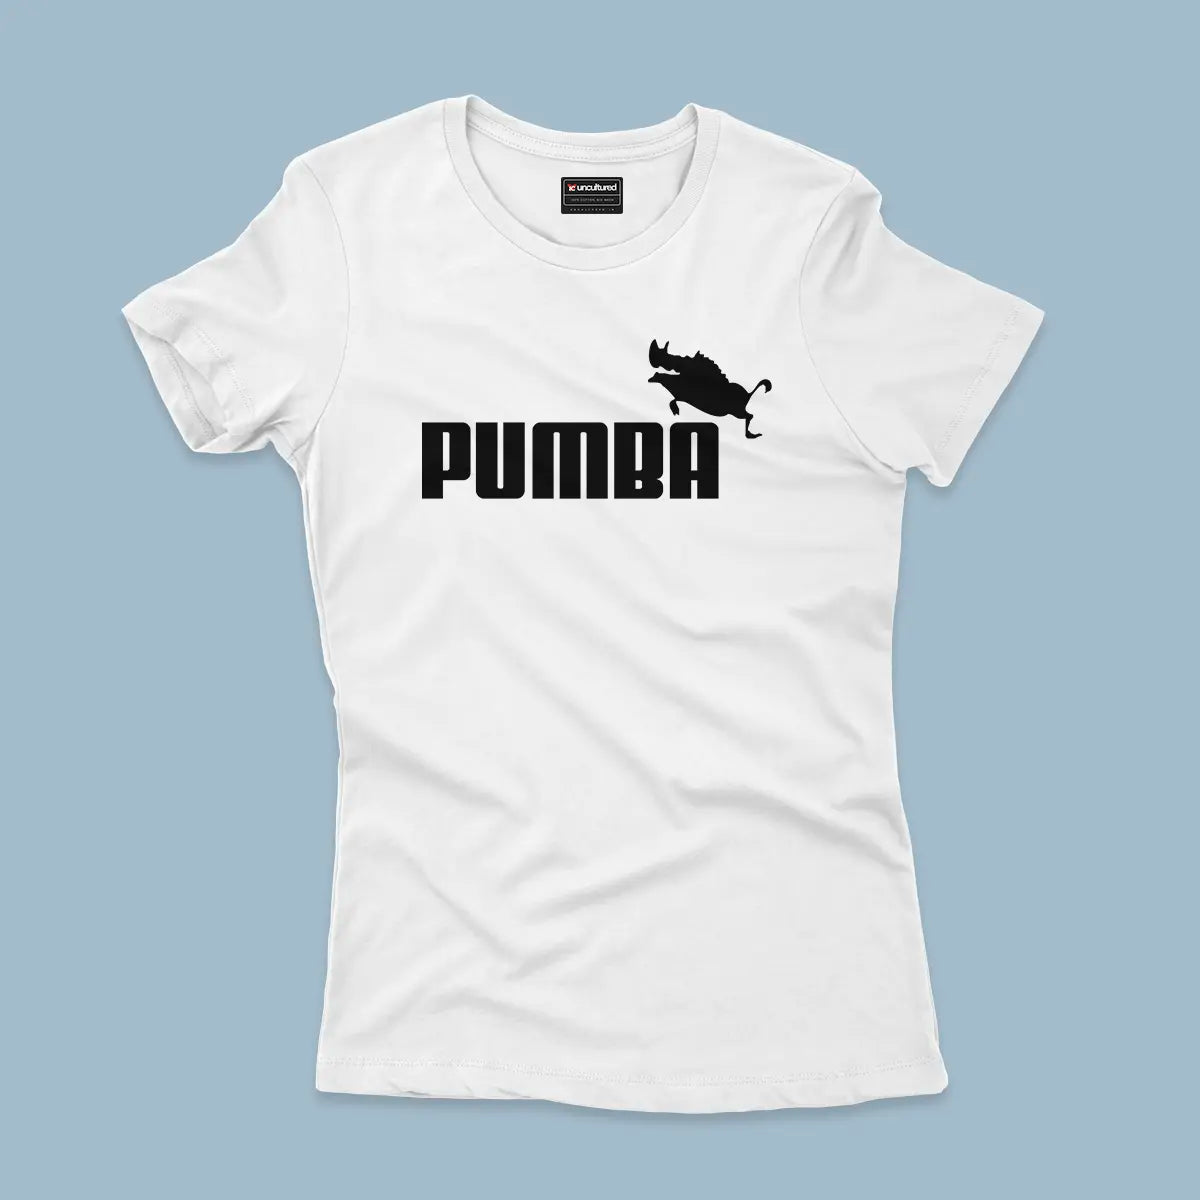 Pumba - Regular - Women